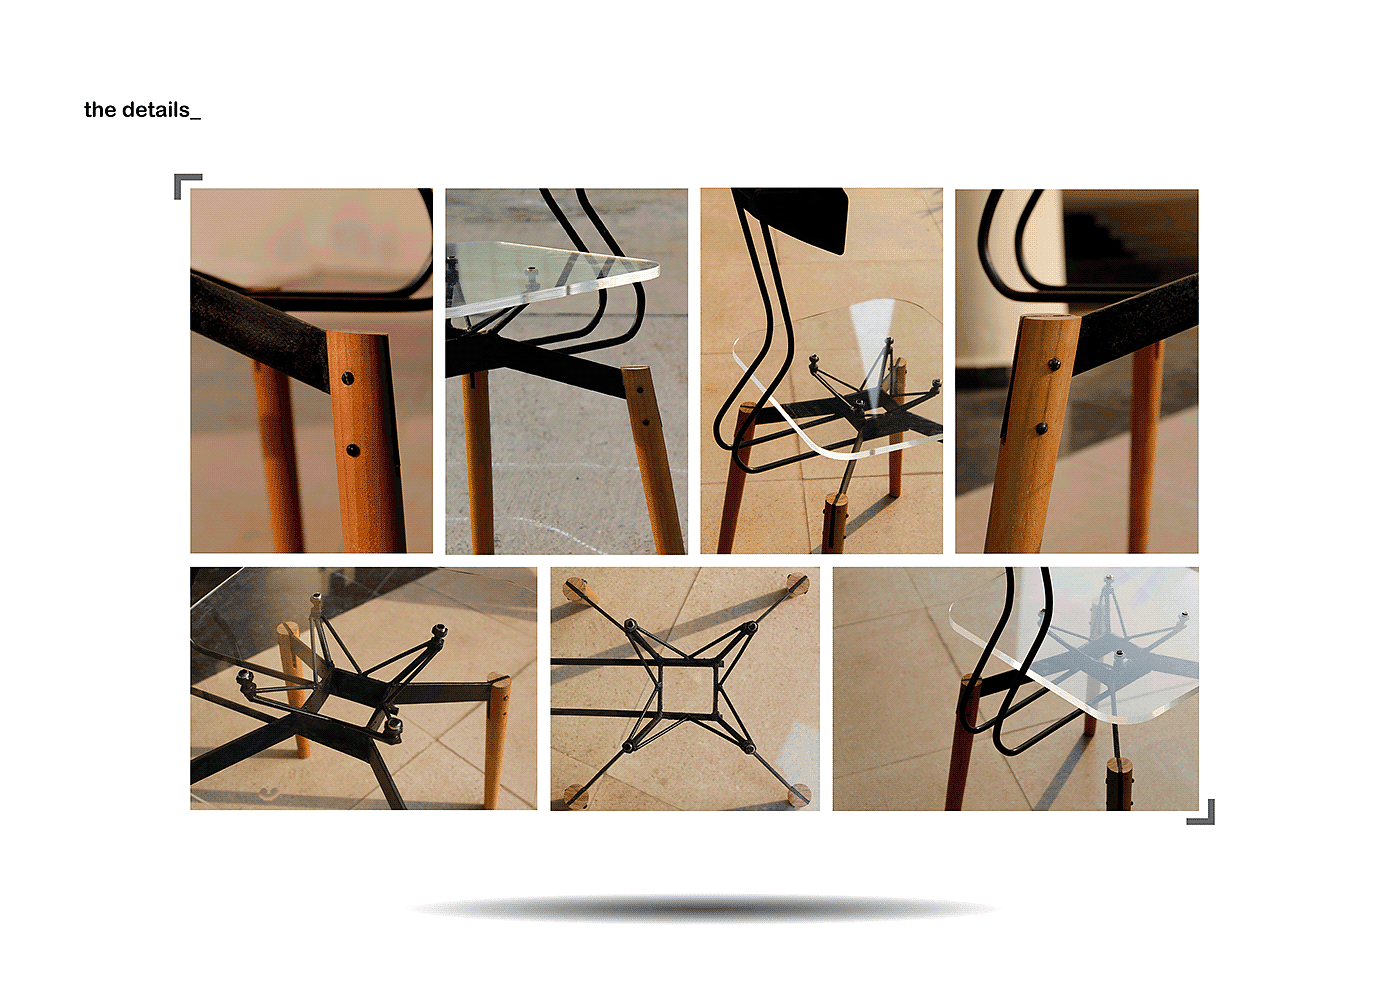 Constellation，Chair，星座椅，